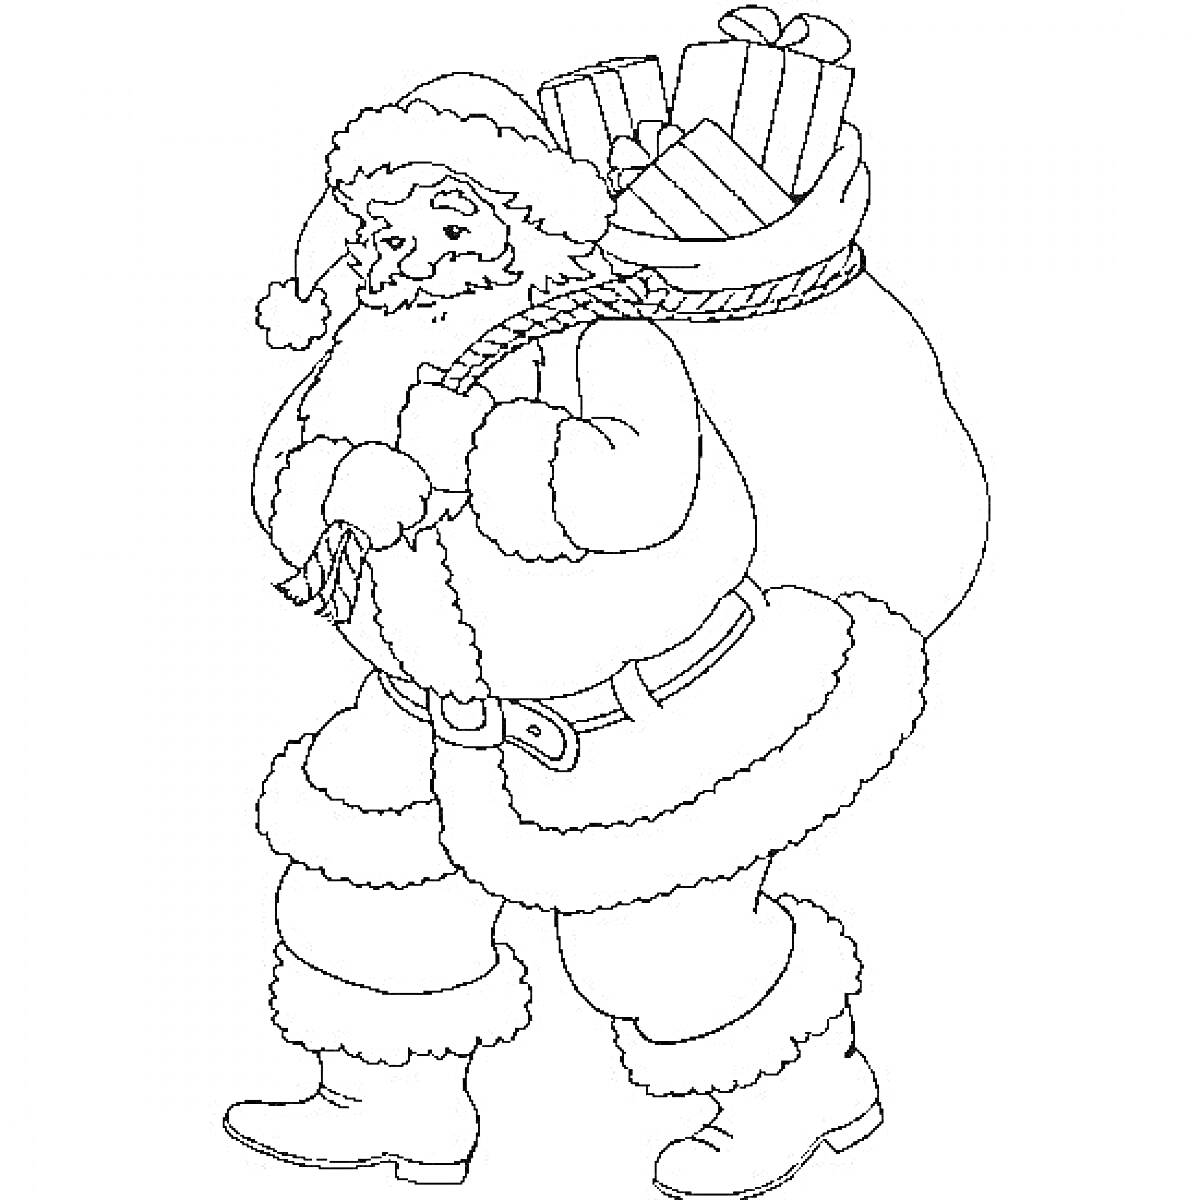 Санта Клаус с мешком подарков на плече